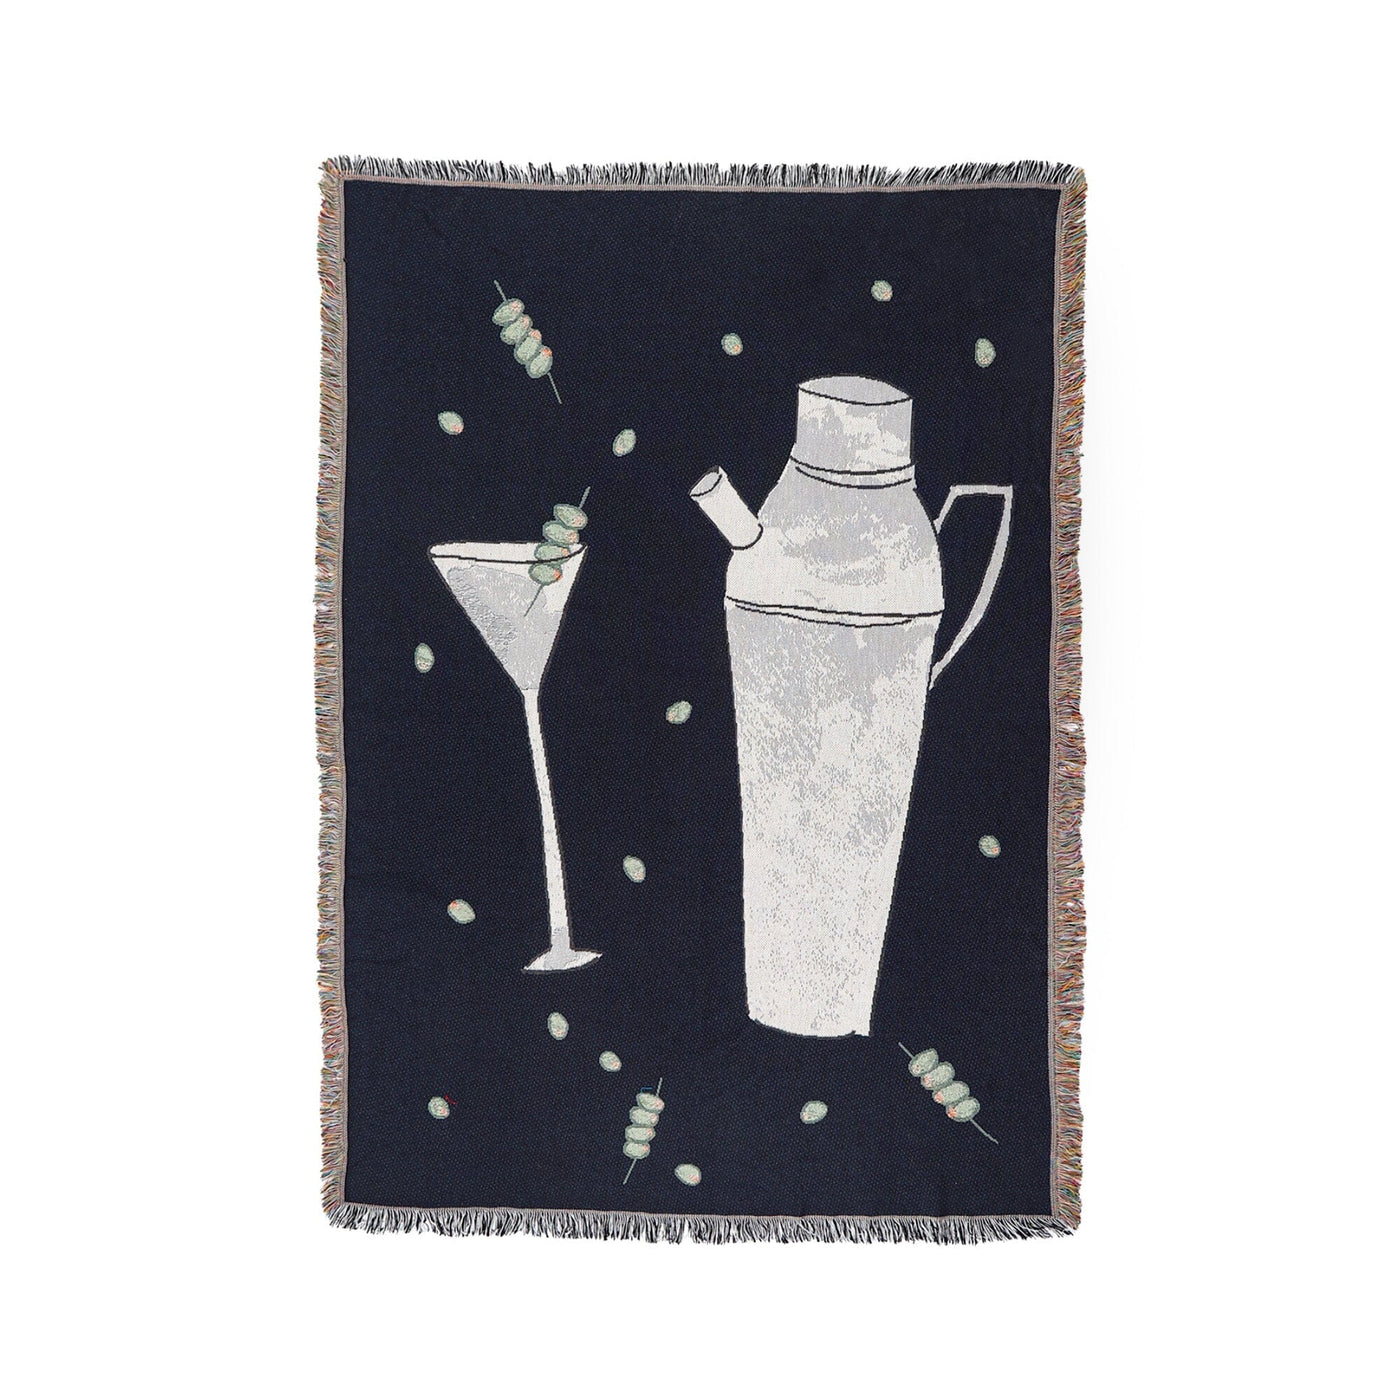 Martini Blanket martini lover gift ideas Chefanie 